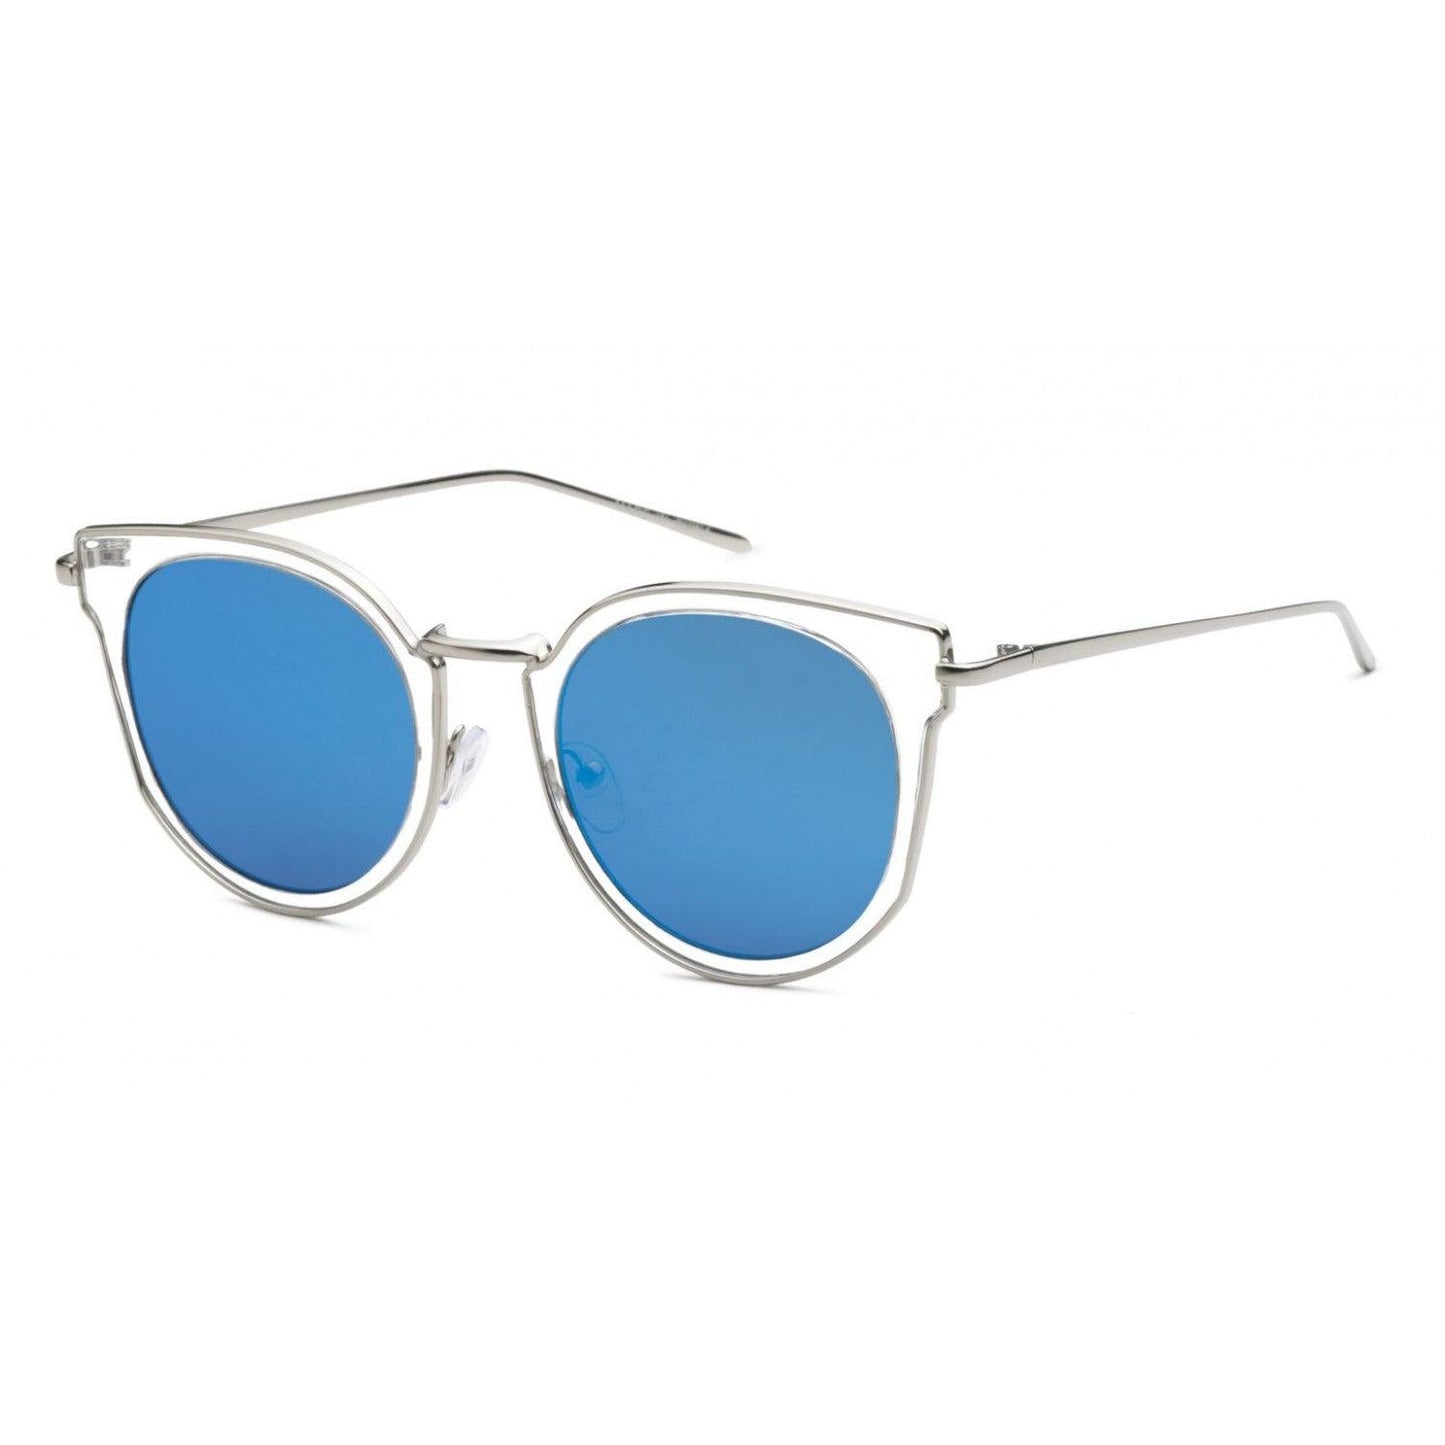 "Nila" Cat Eye  Frame Sunglasses - Weekend Shade Sunglasses